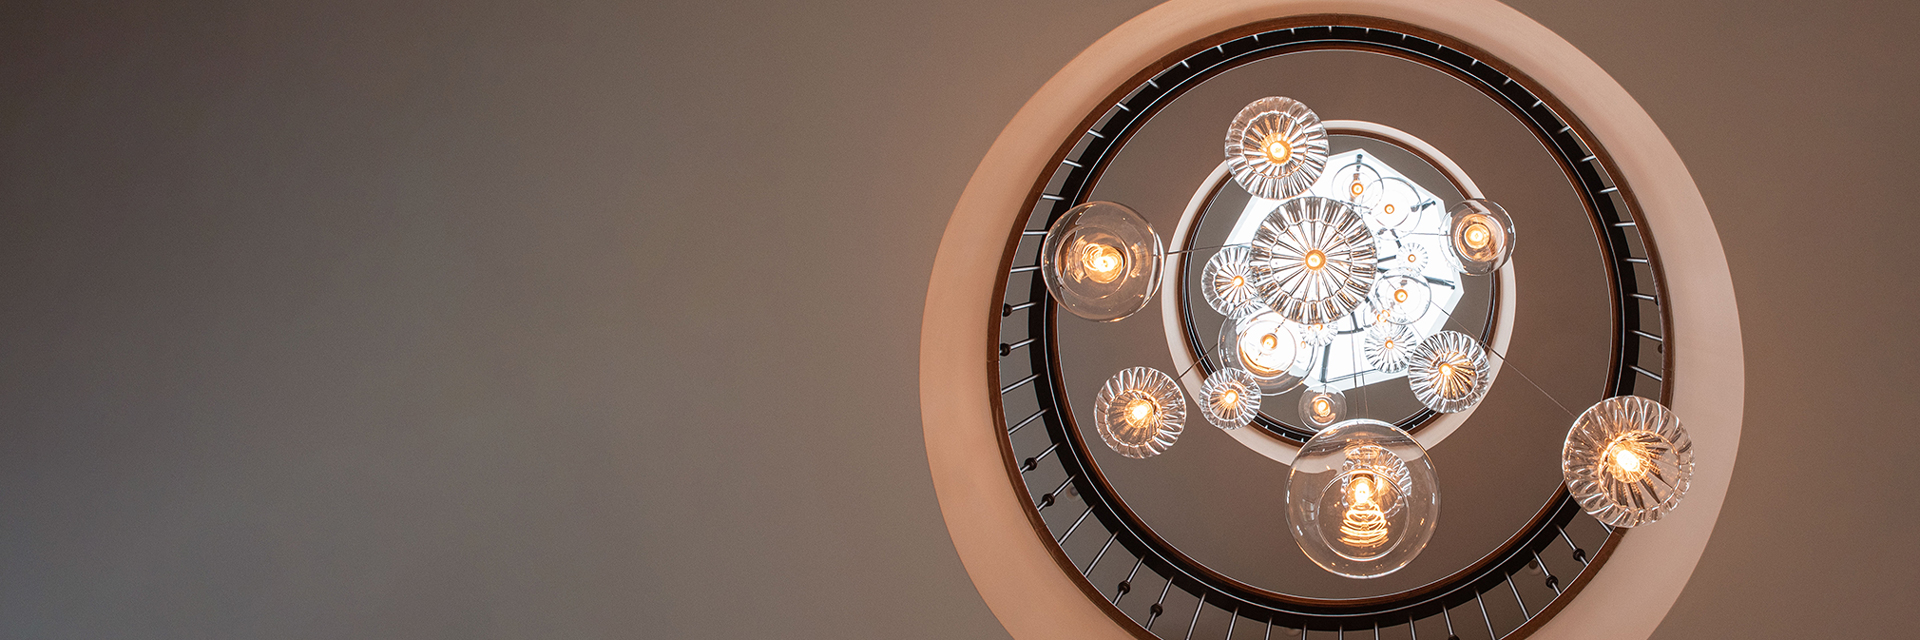 A stairwell Lighting design by the Fritz Fryer design team